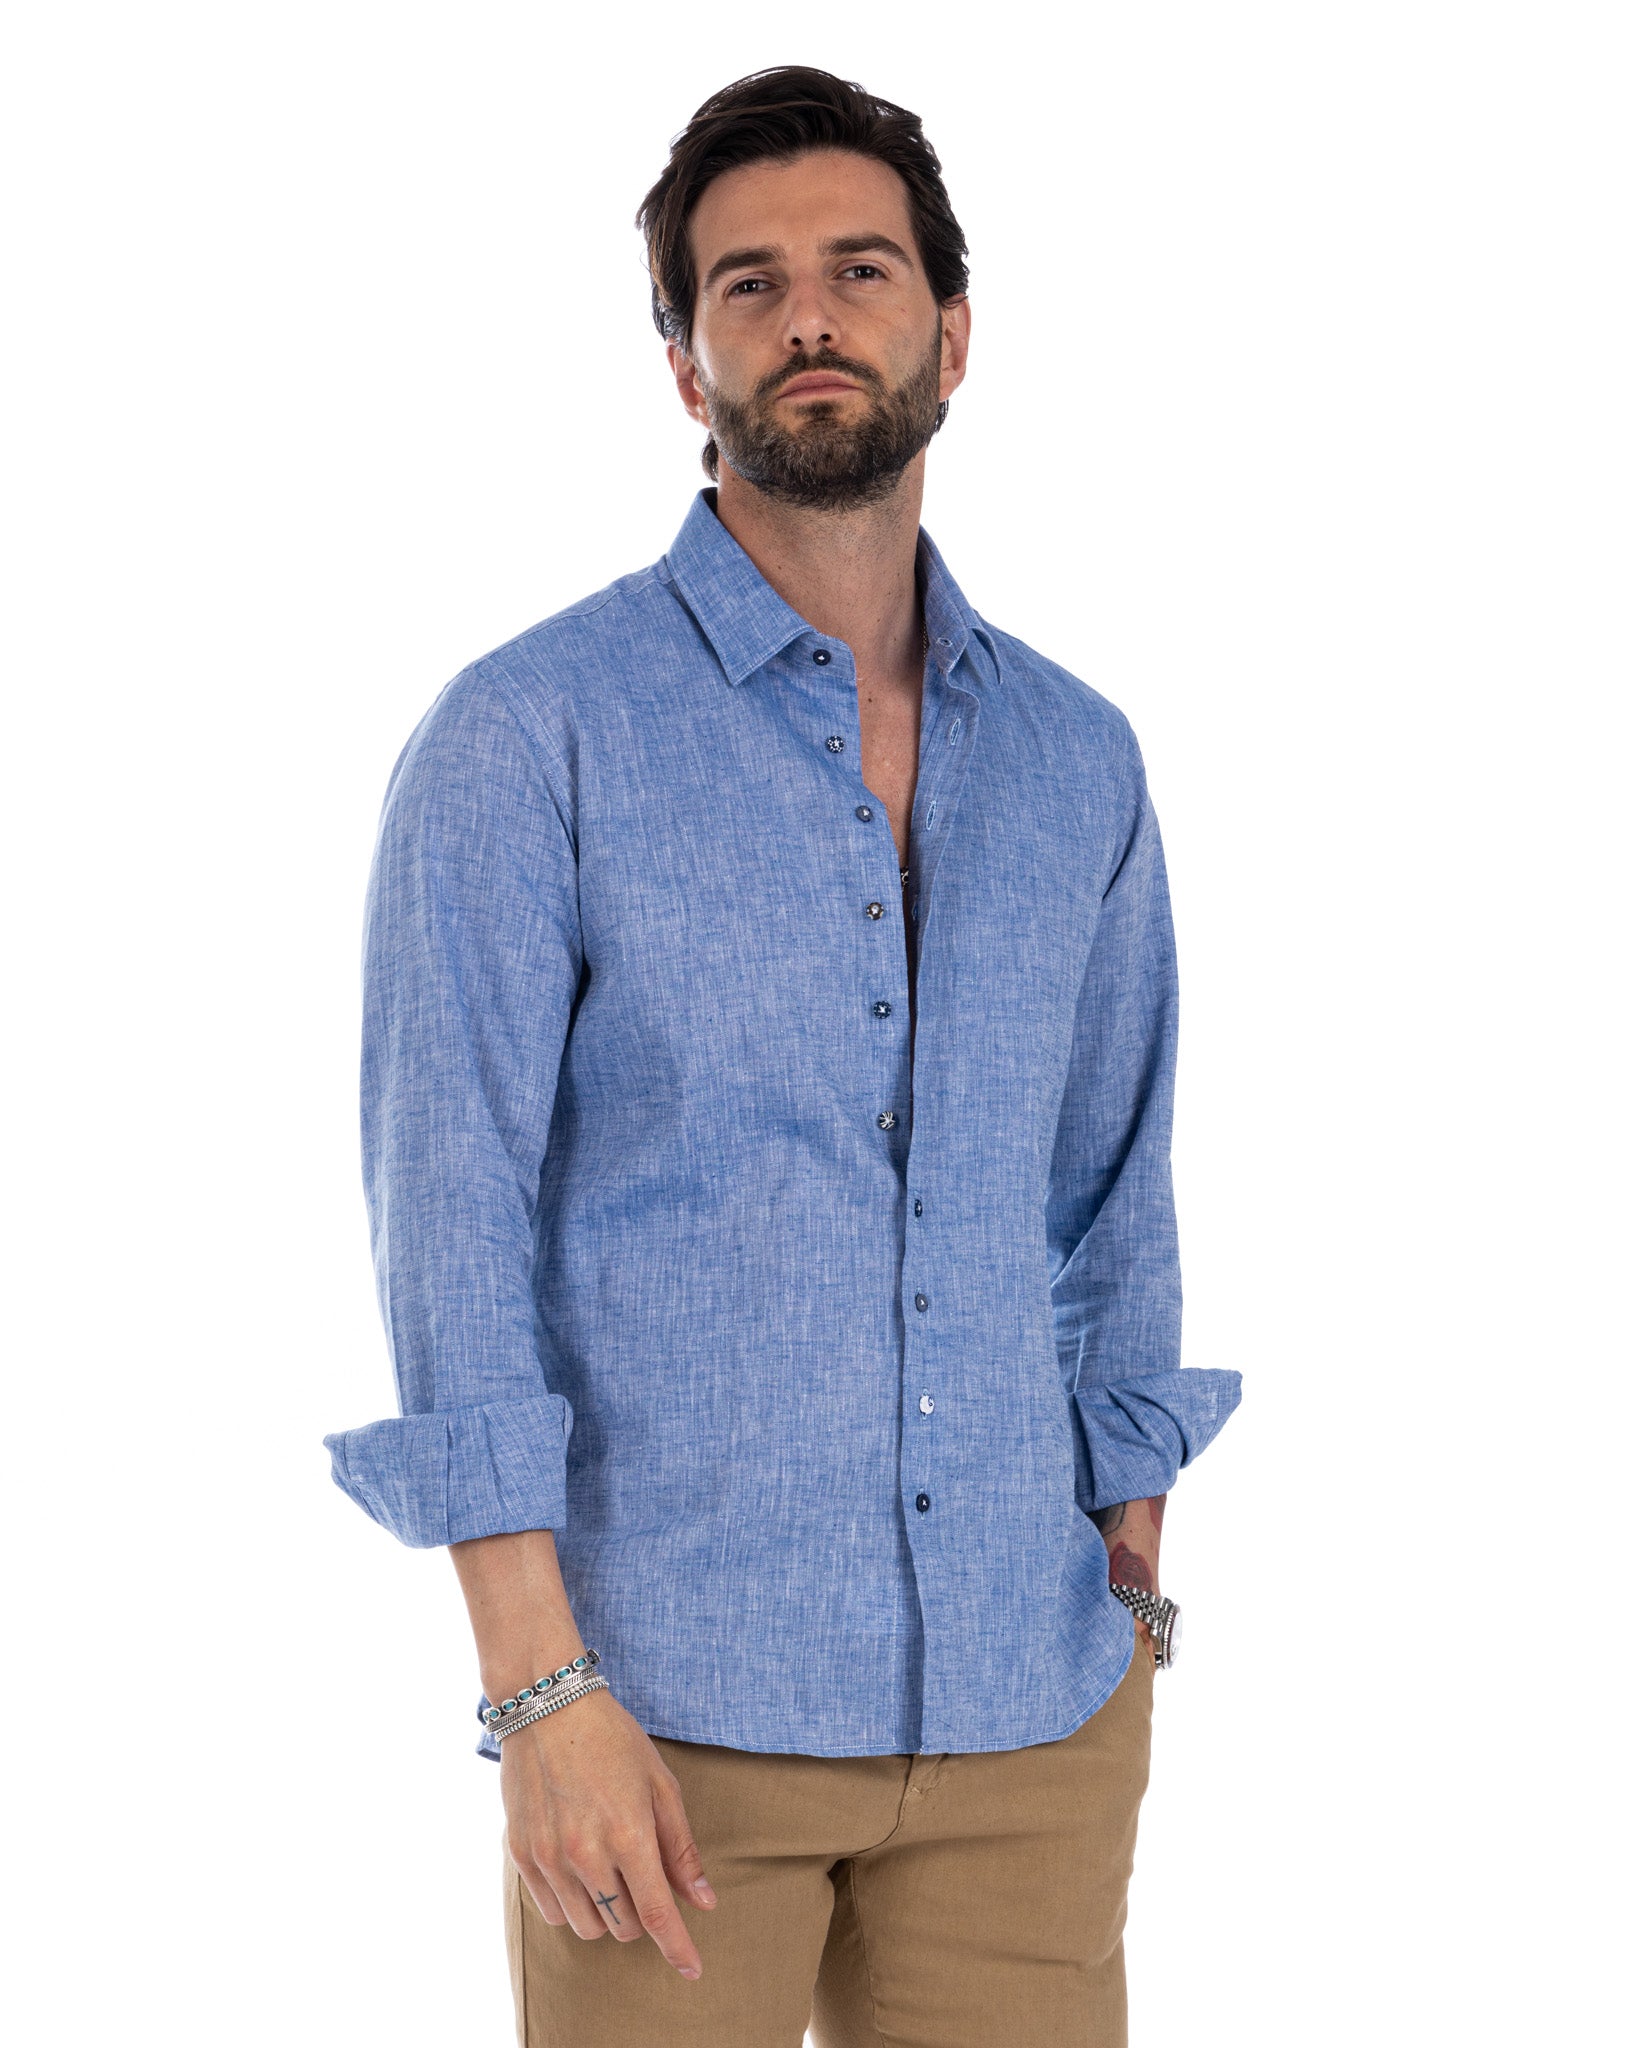 Praiano - chemise française en lin denim